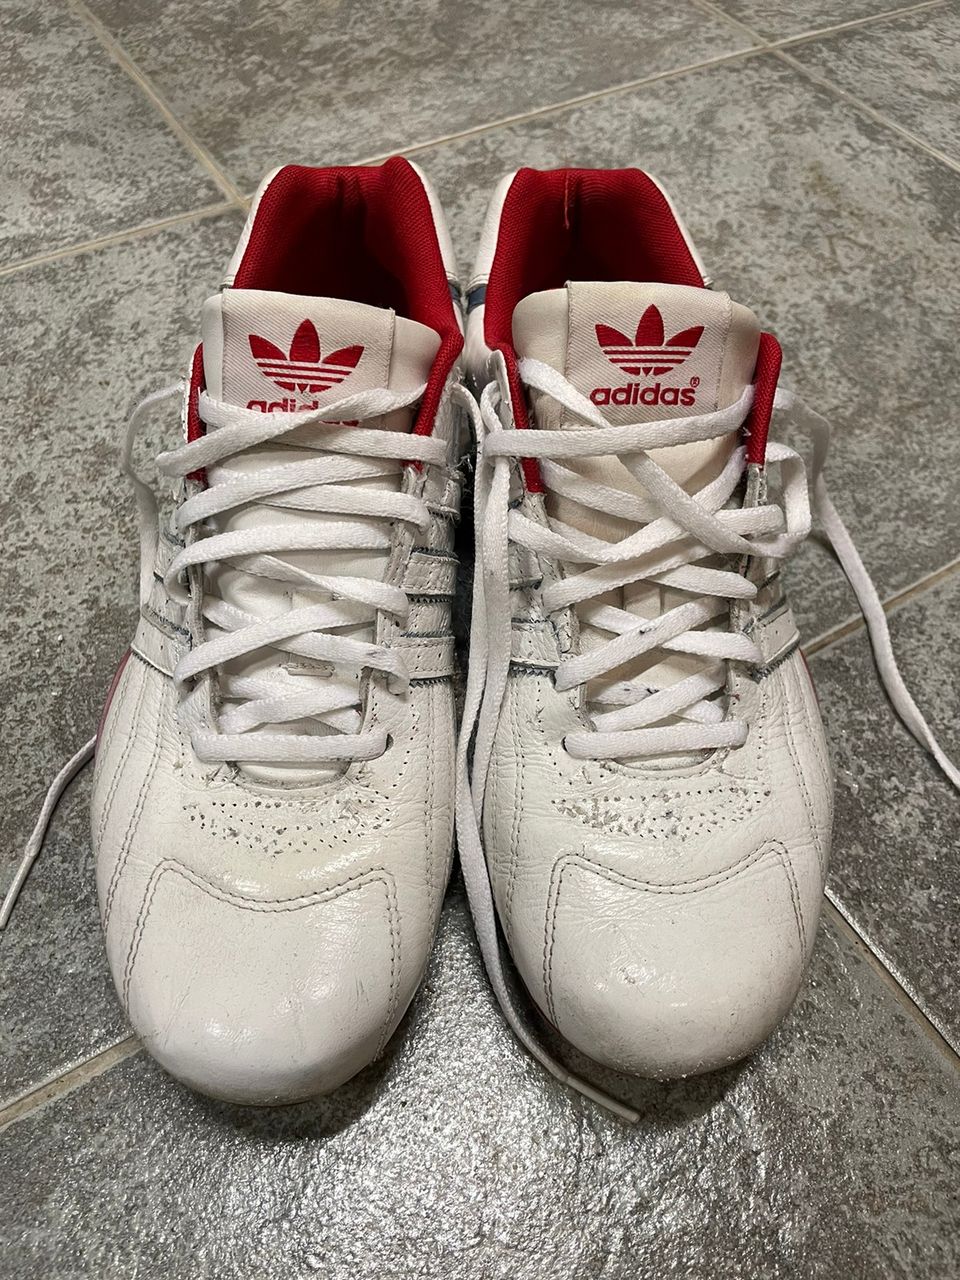 Adidas vapaa-ajan kengät, 41